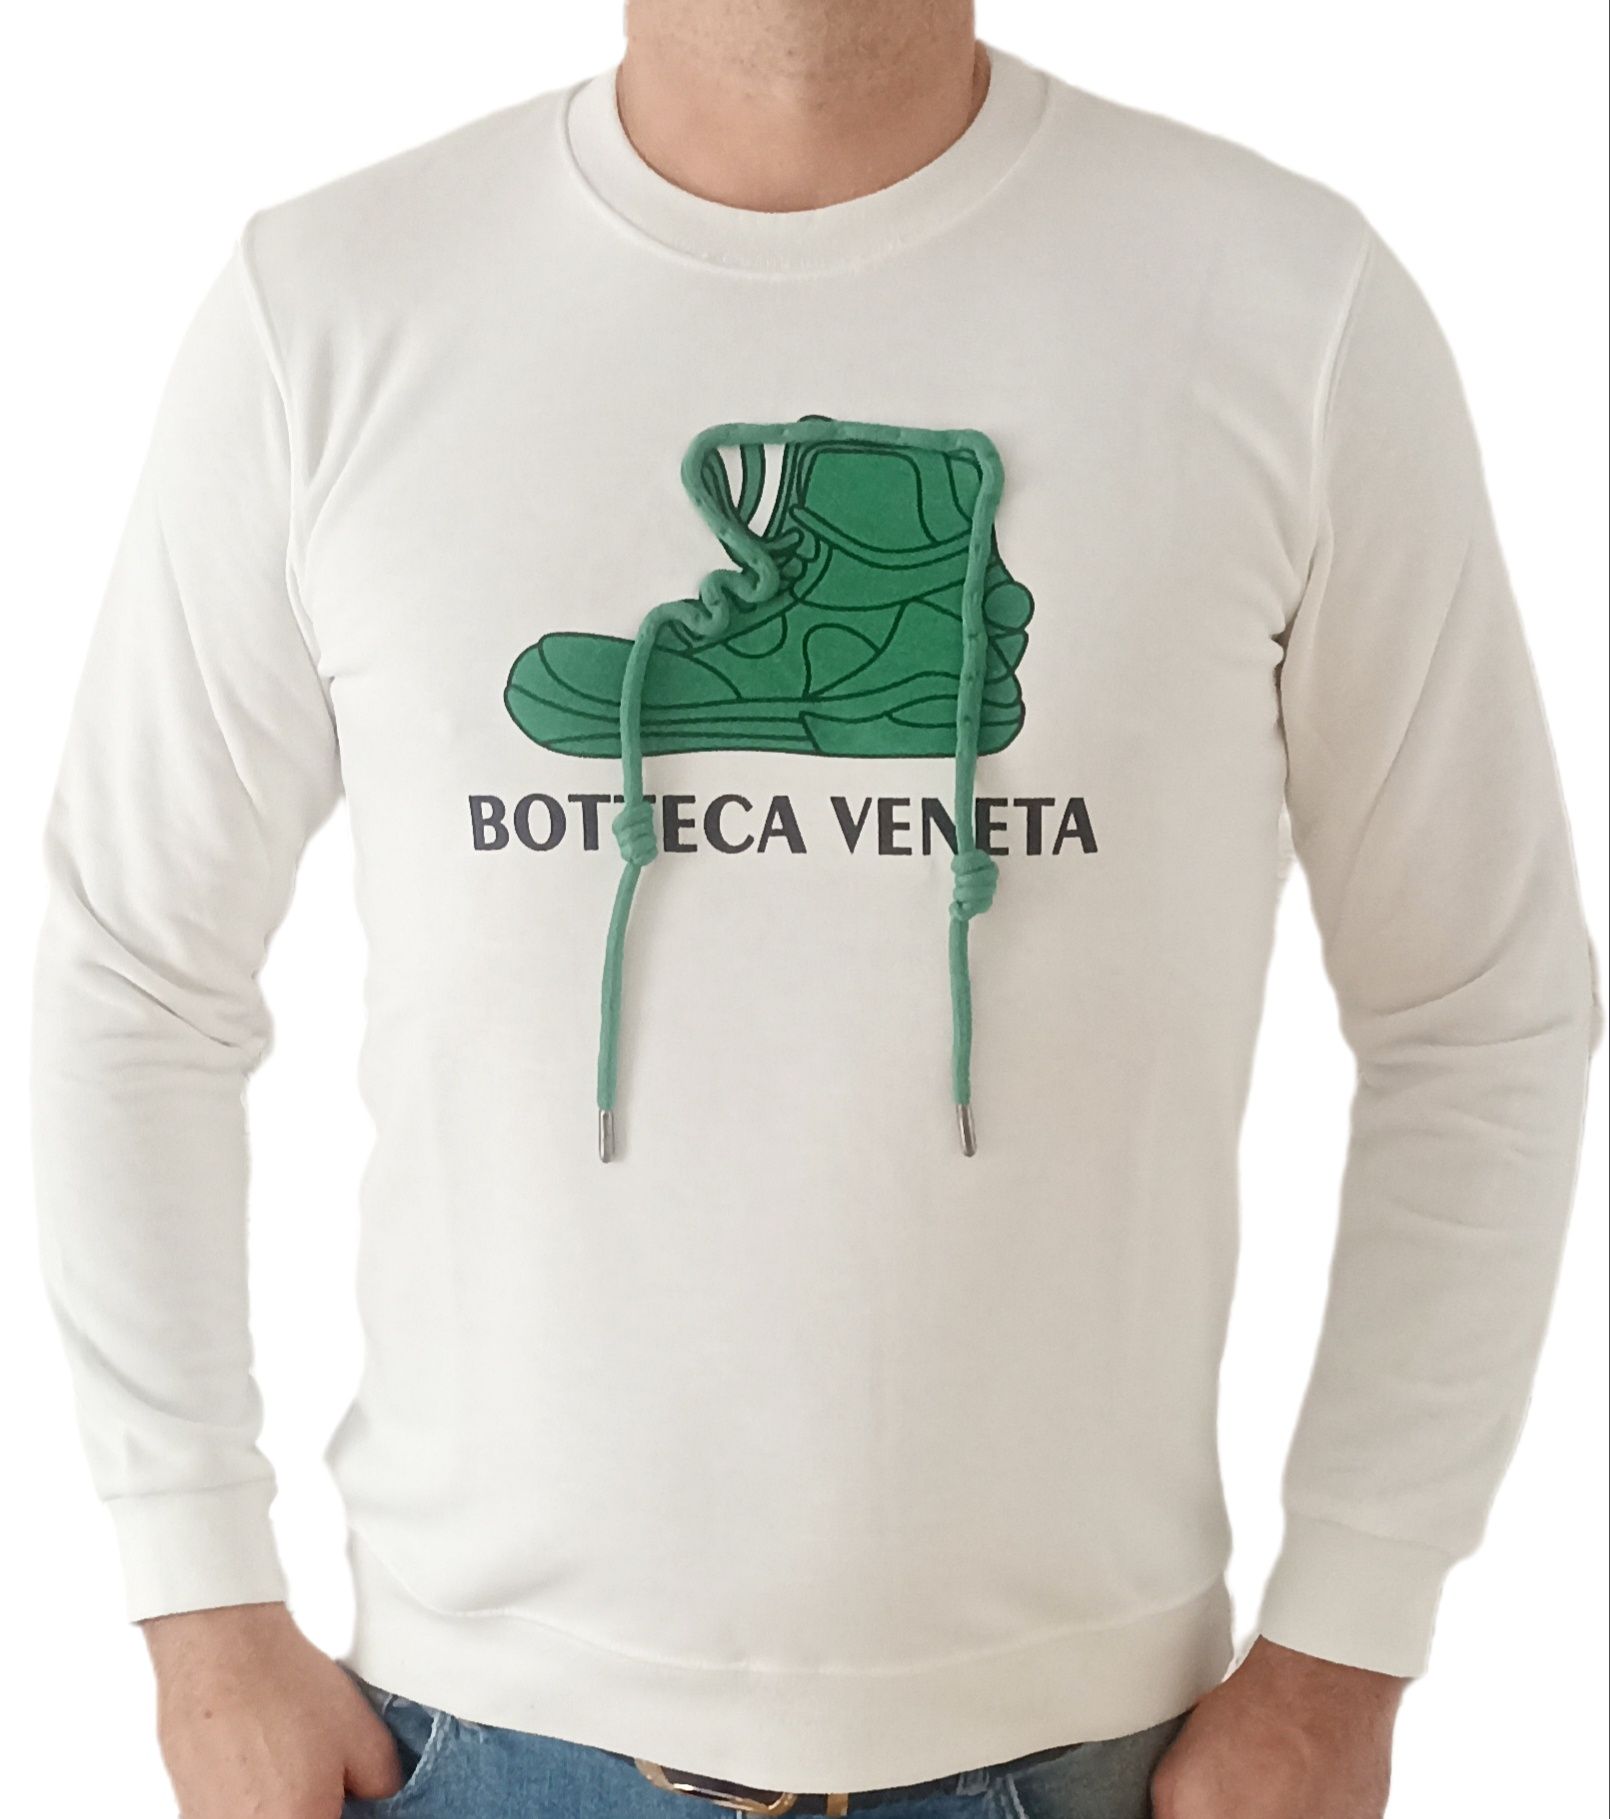 Bluza Botteca Veneta r.S,M,L,XL,XXL